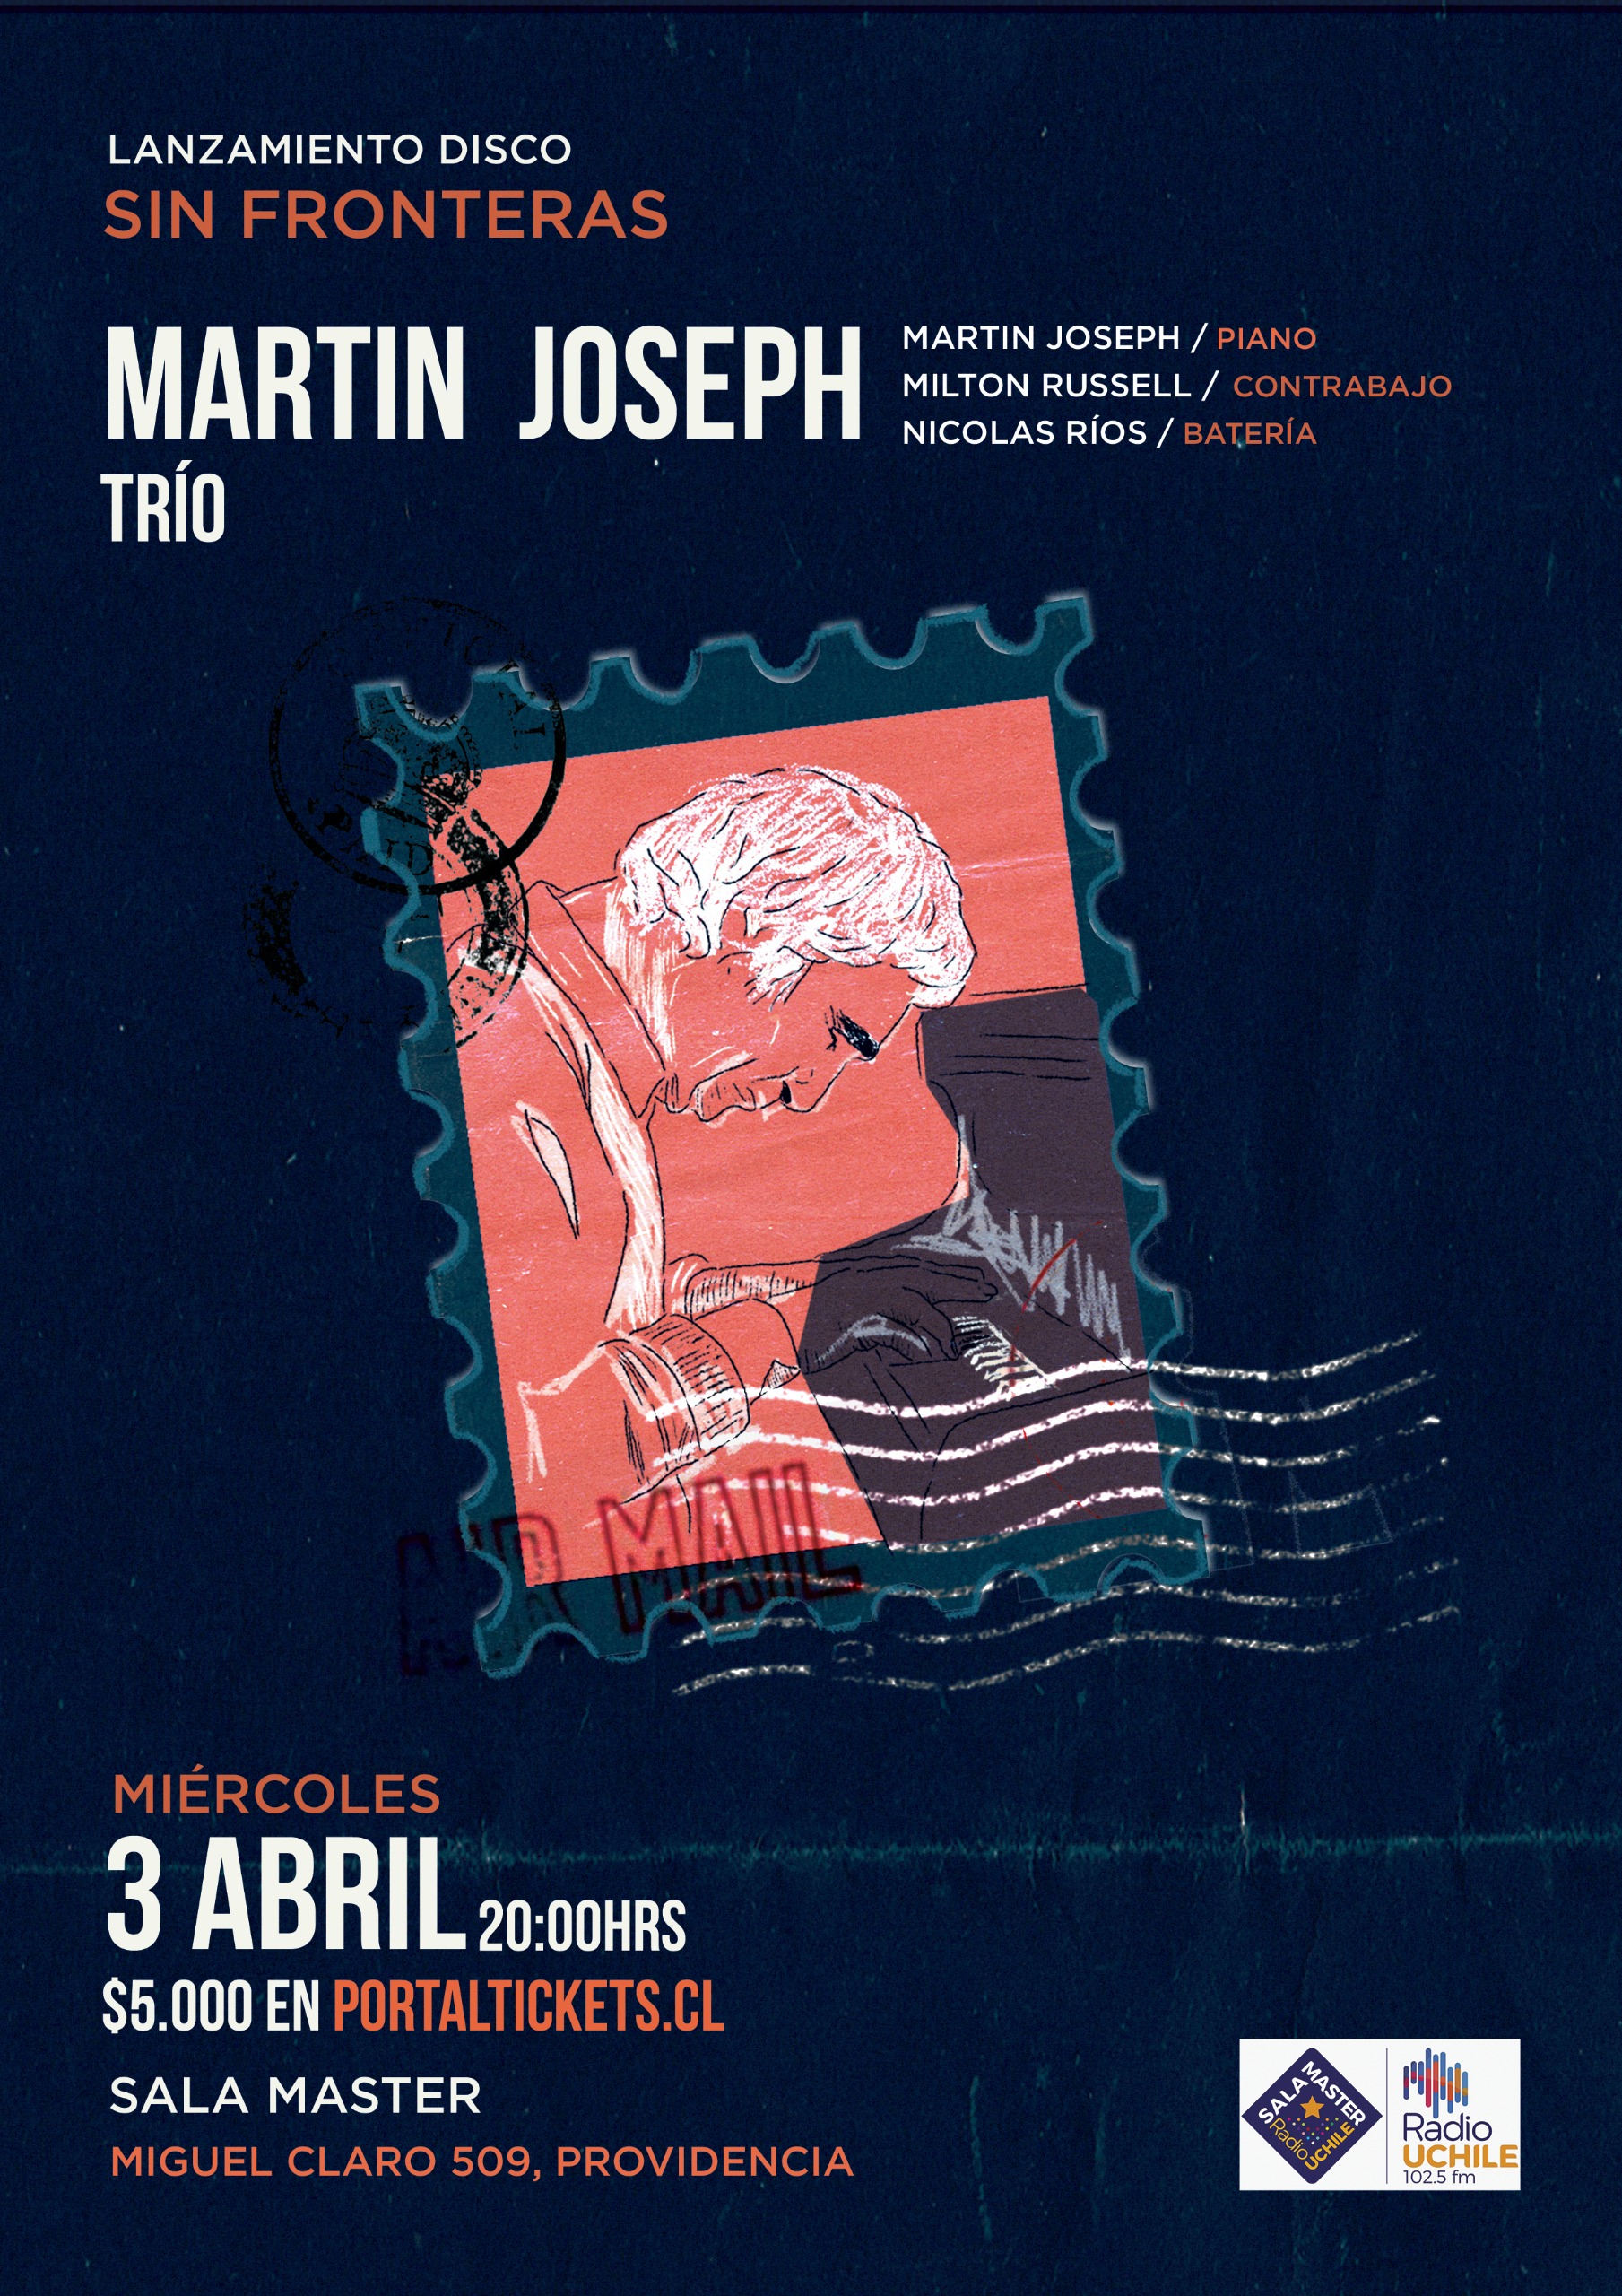 Martin Joseph Trio, lanzamiento disco "Sin Fronteras"